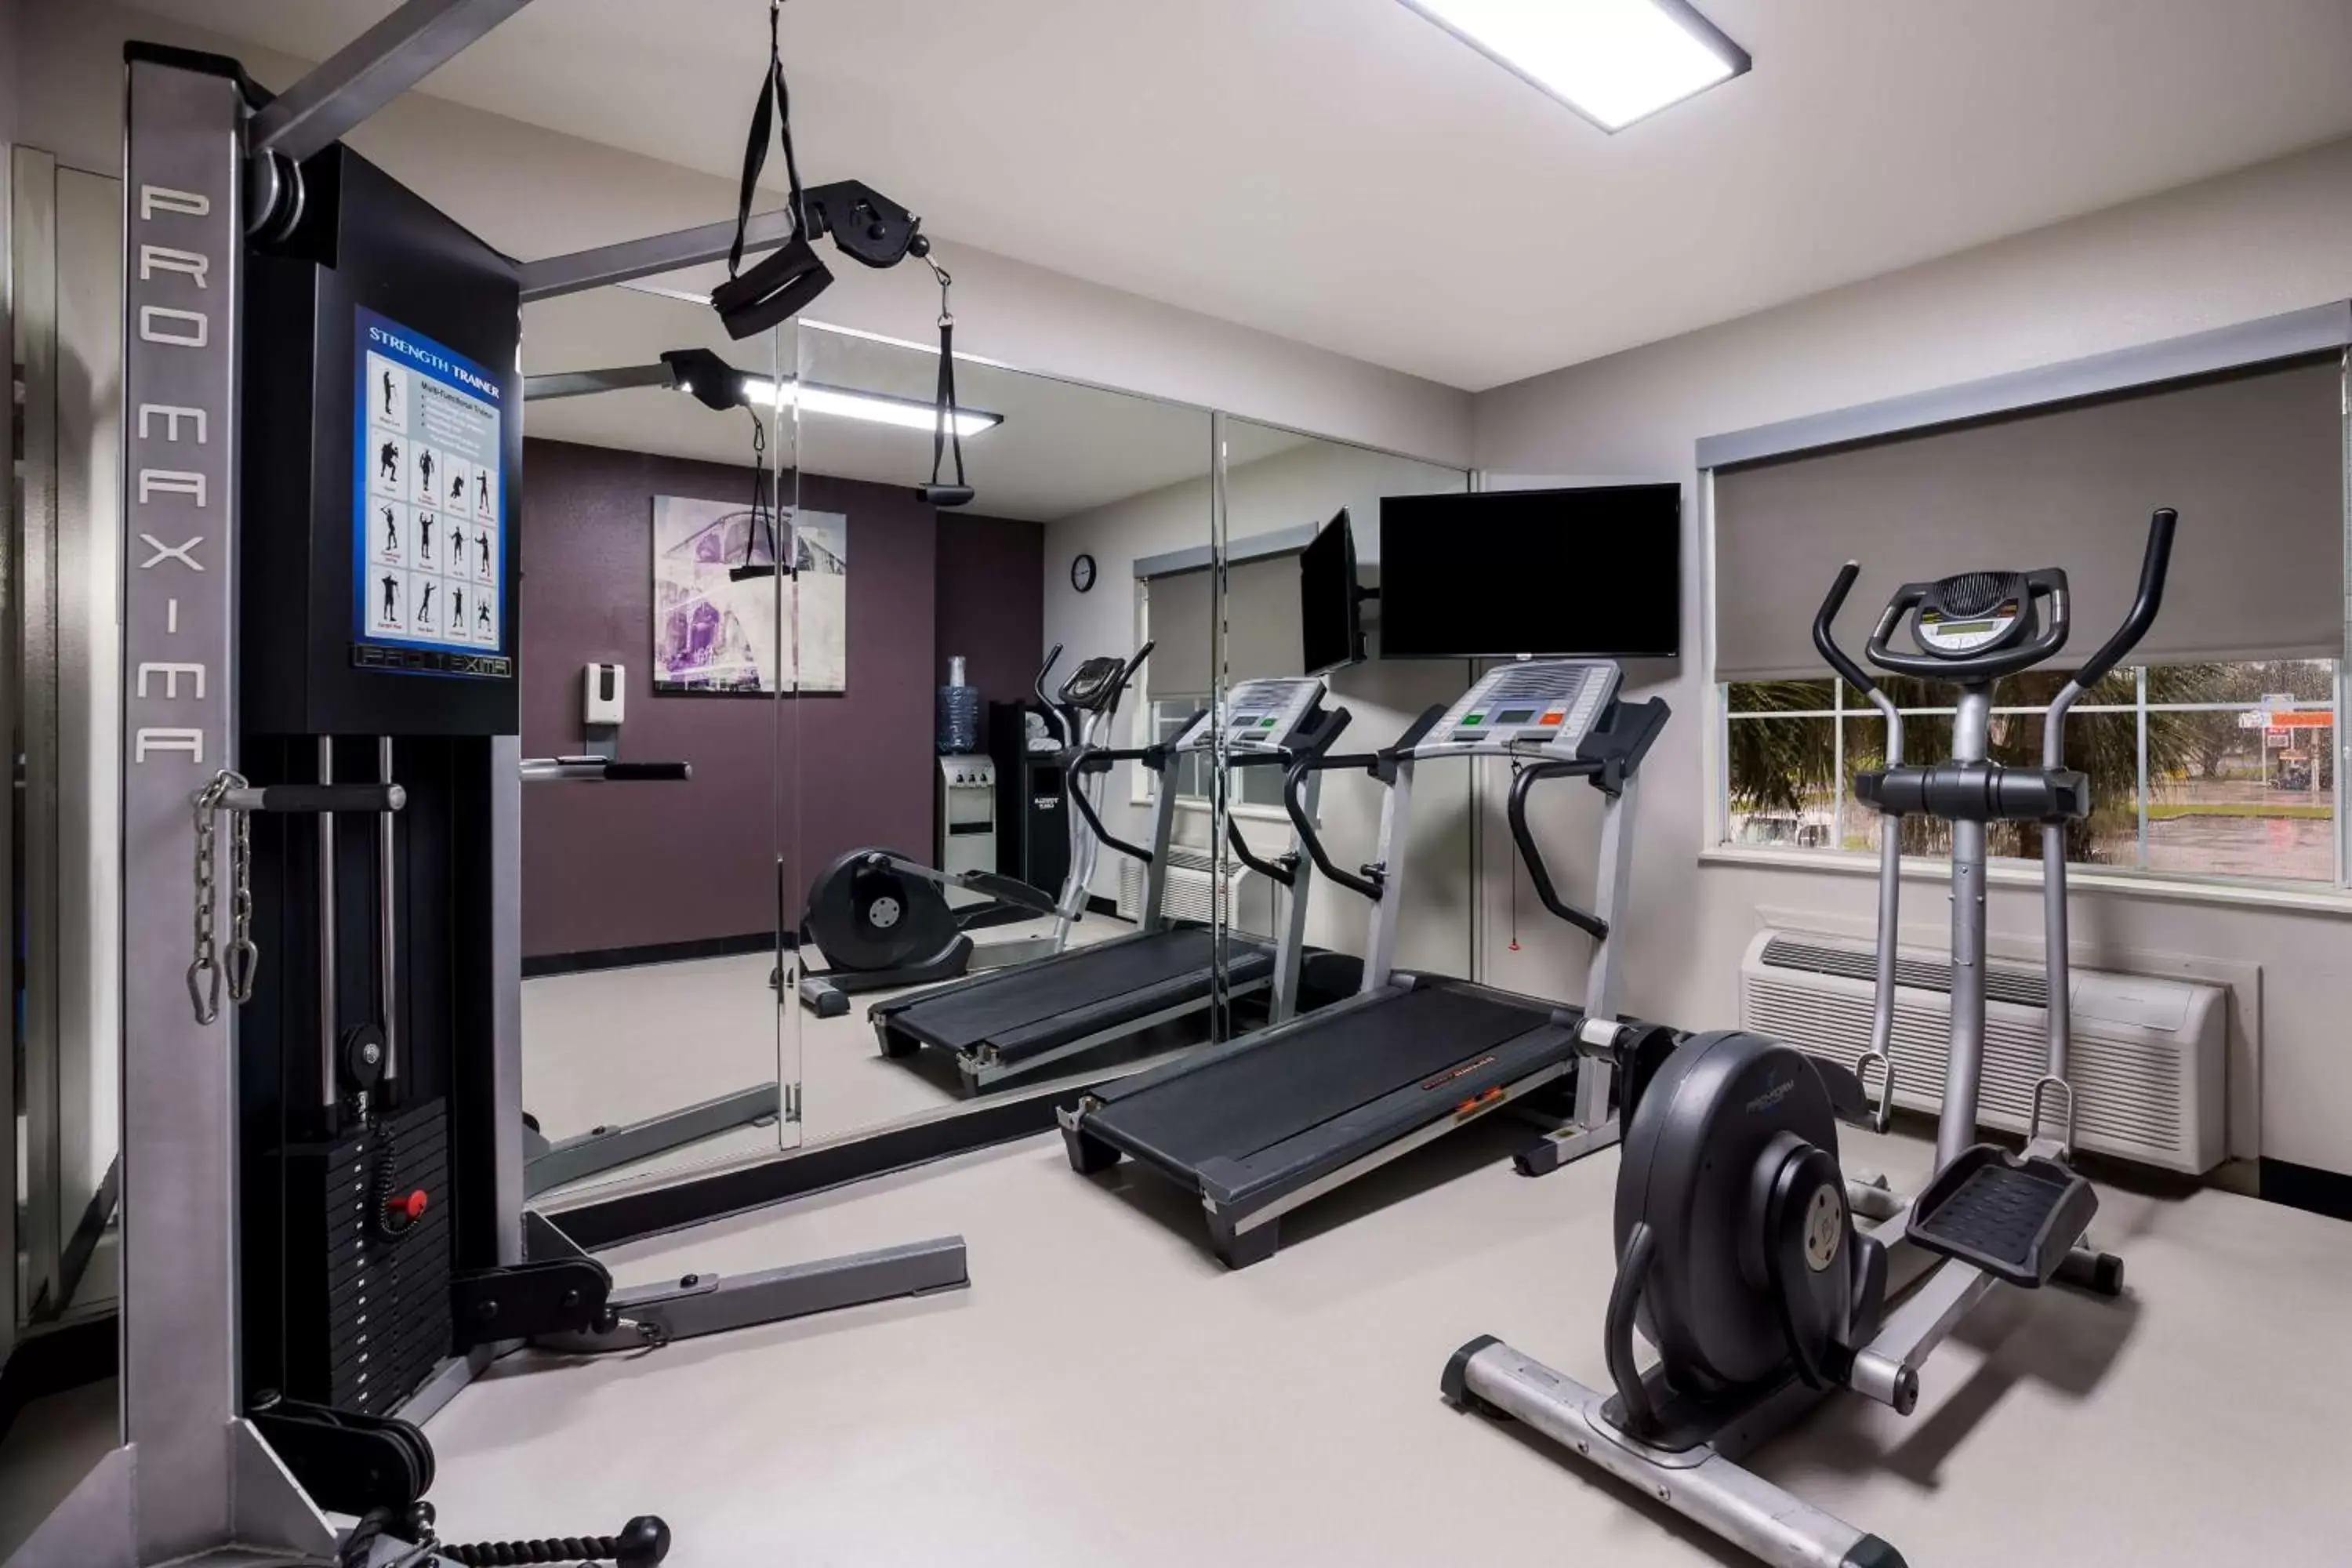 Fitness centre/facilities, Fitness Center/Facilities in Best Western Morgan City Inn